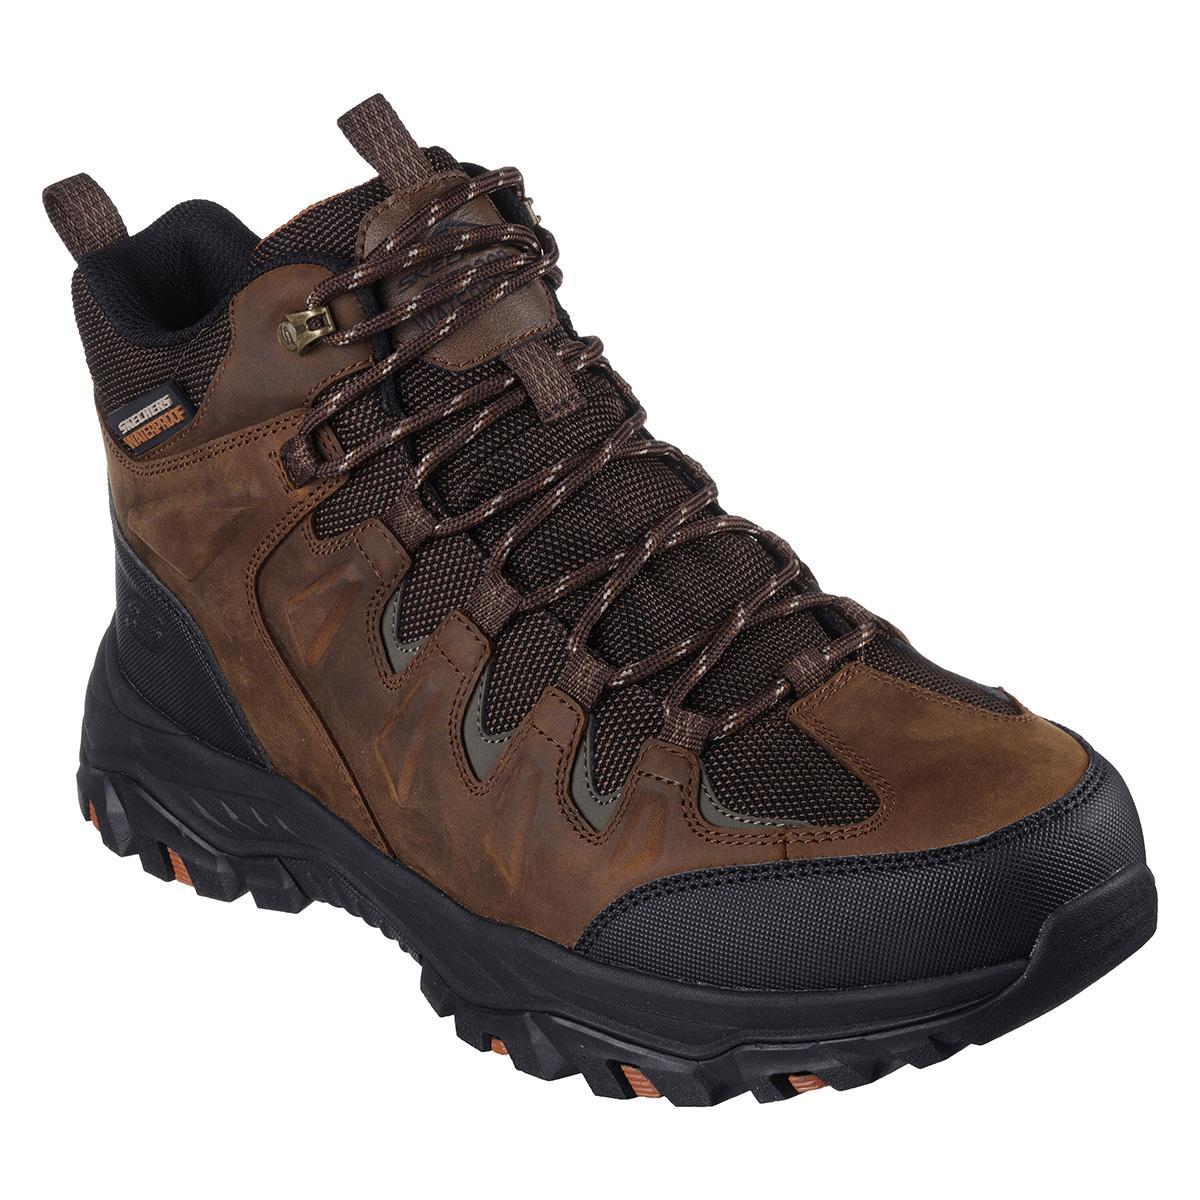 Skechers Men's Rickter-Branson Waterproof Hiking Boot Product Image